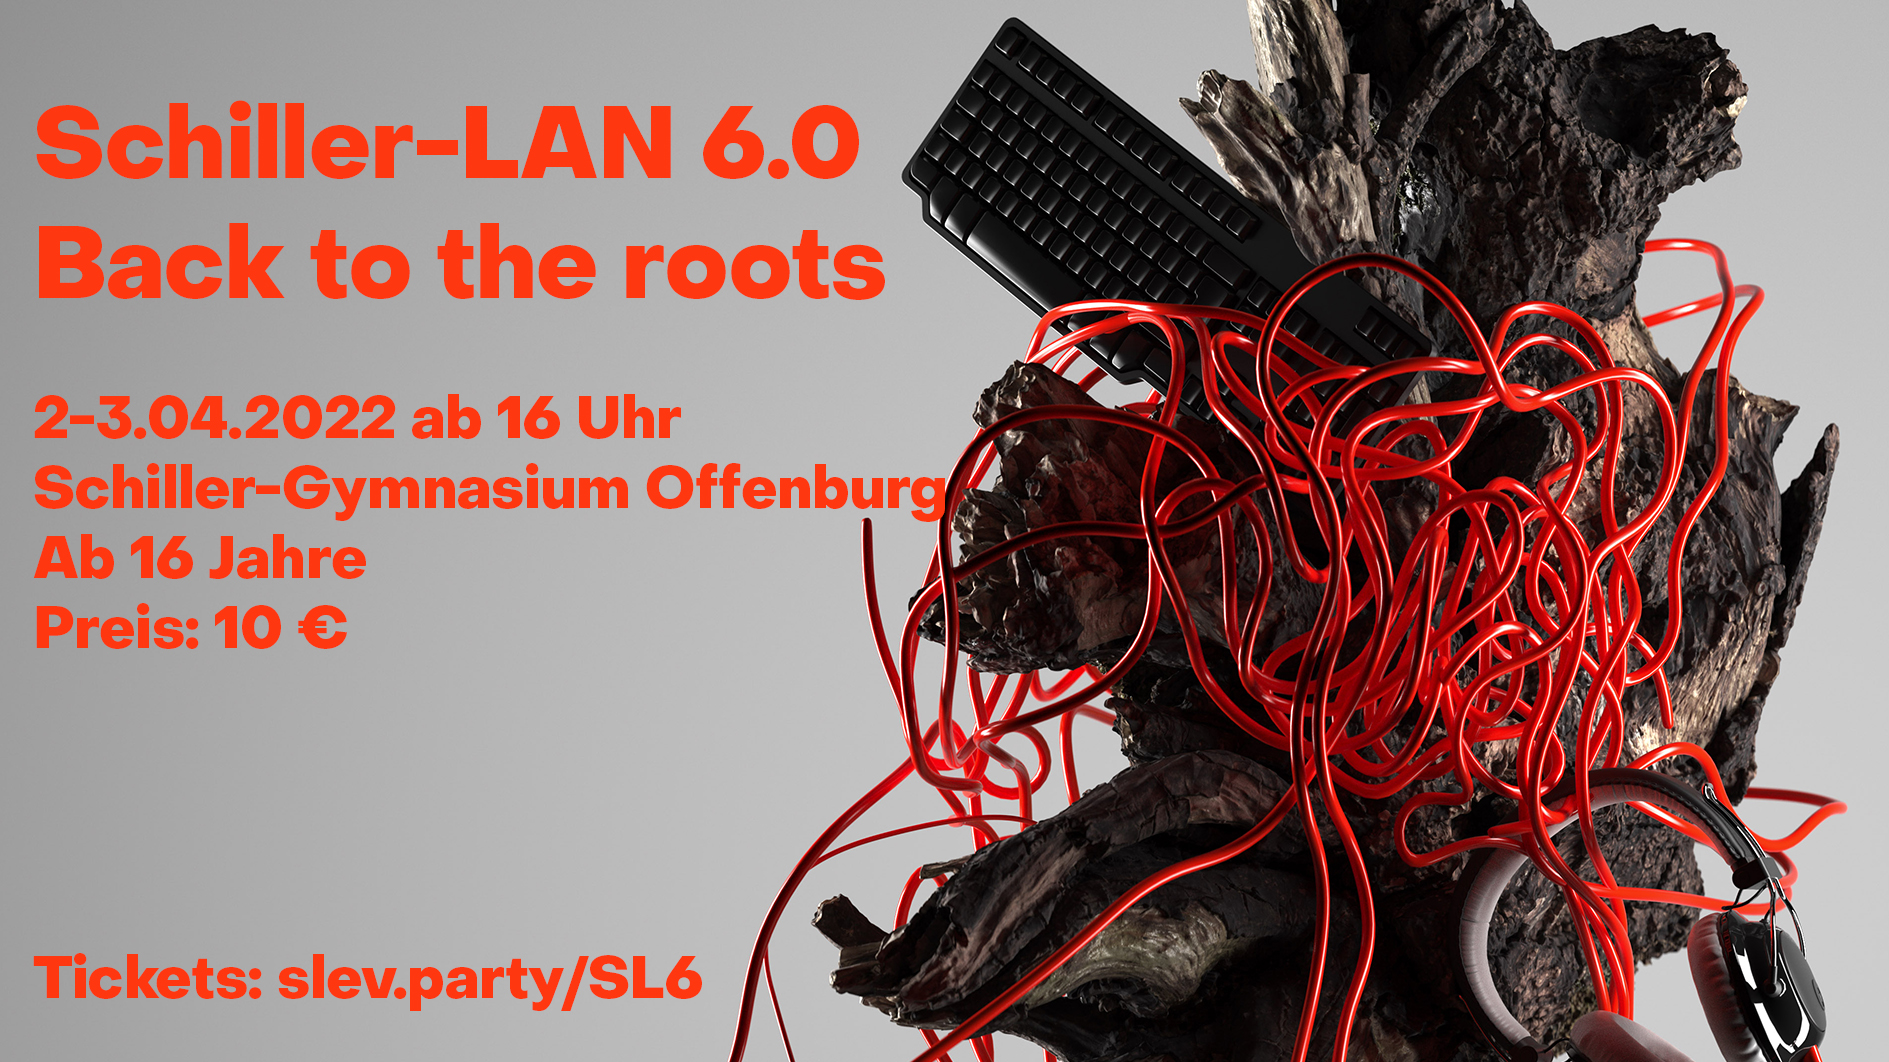 Schiller-LAN 6.0